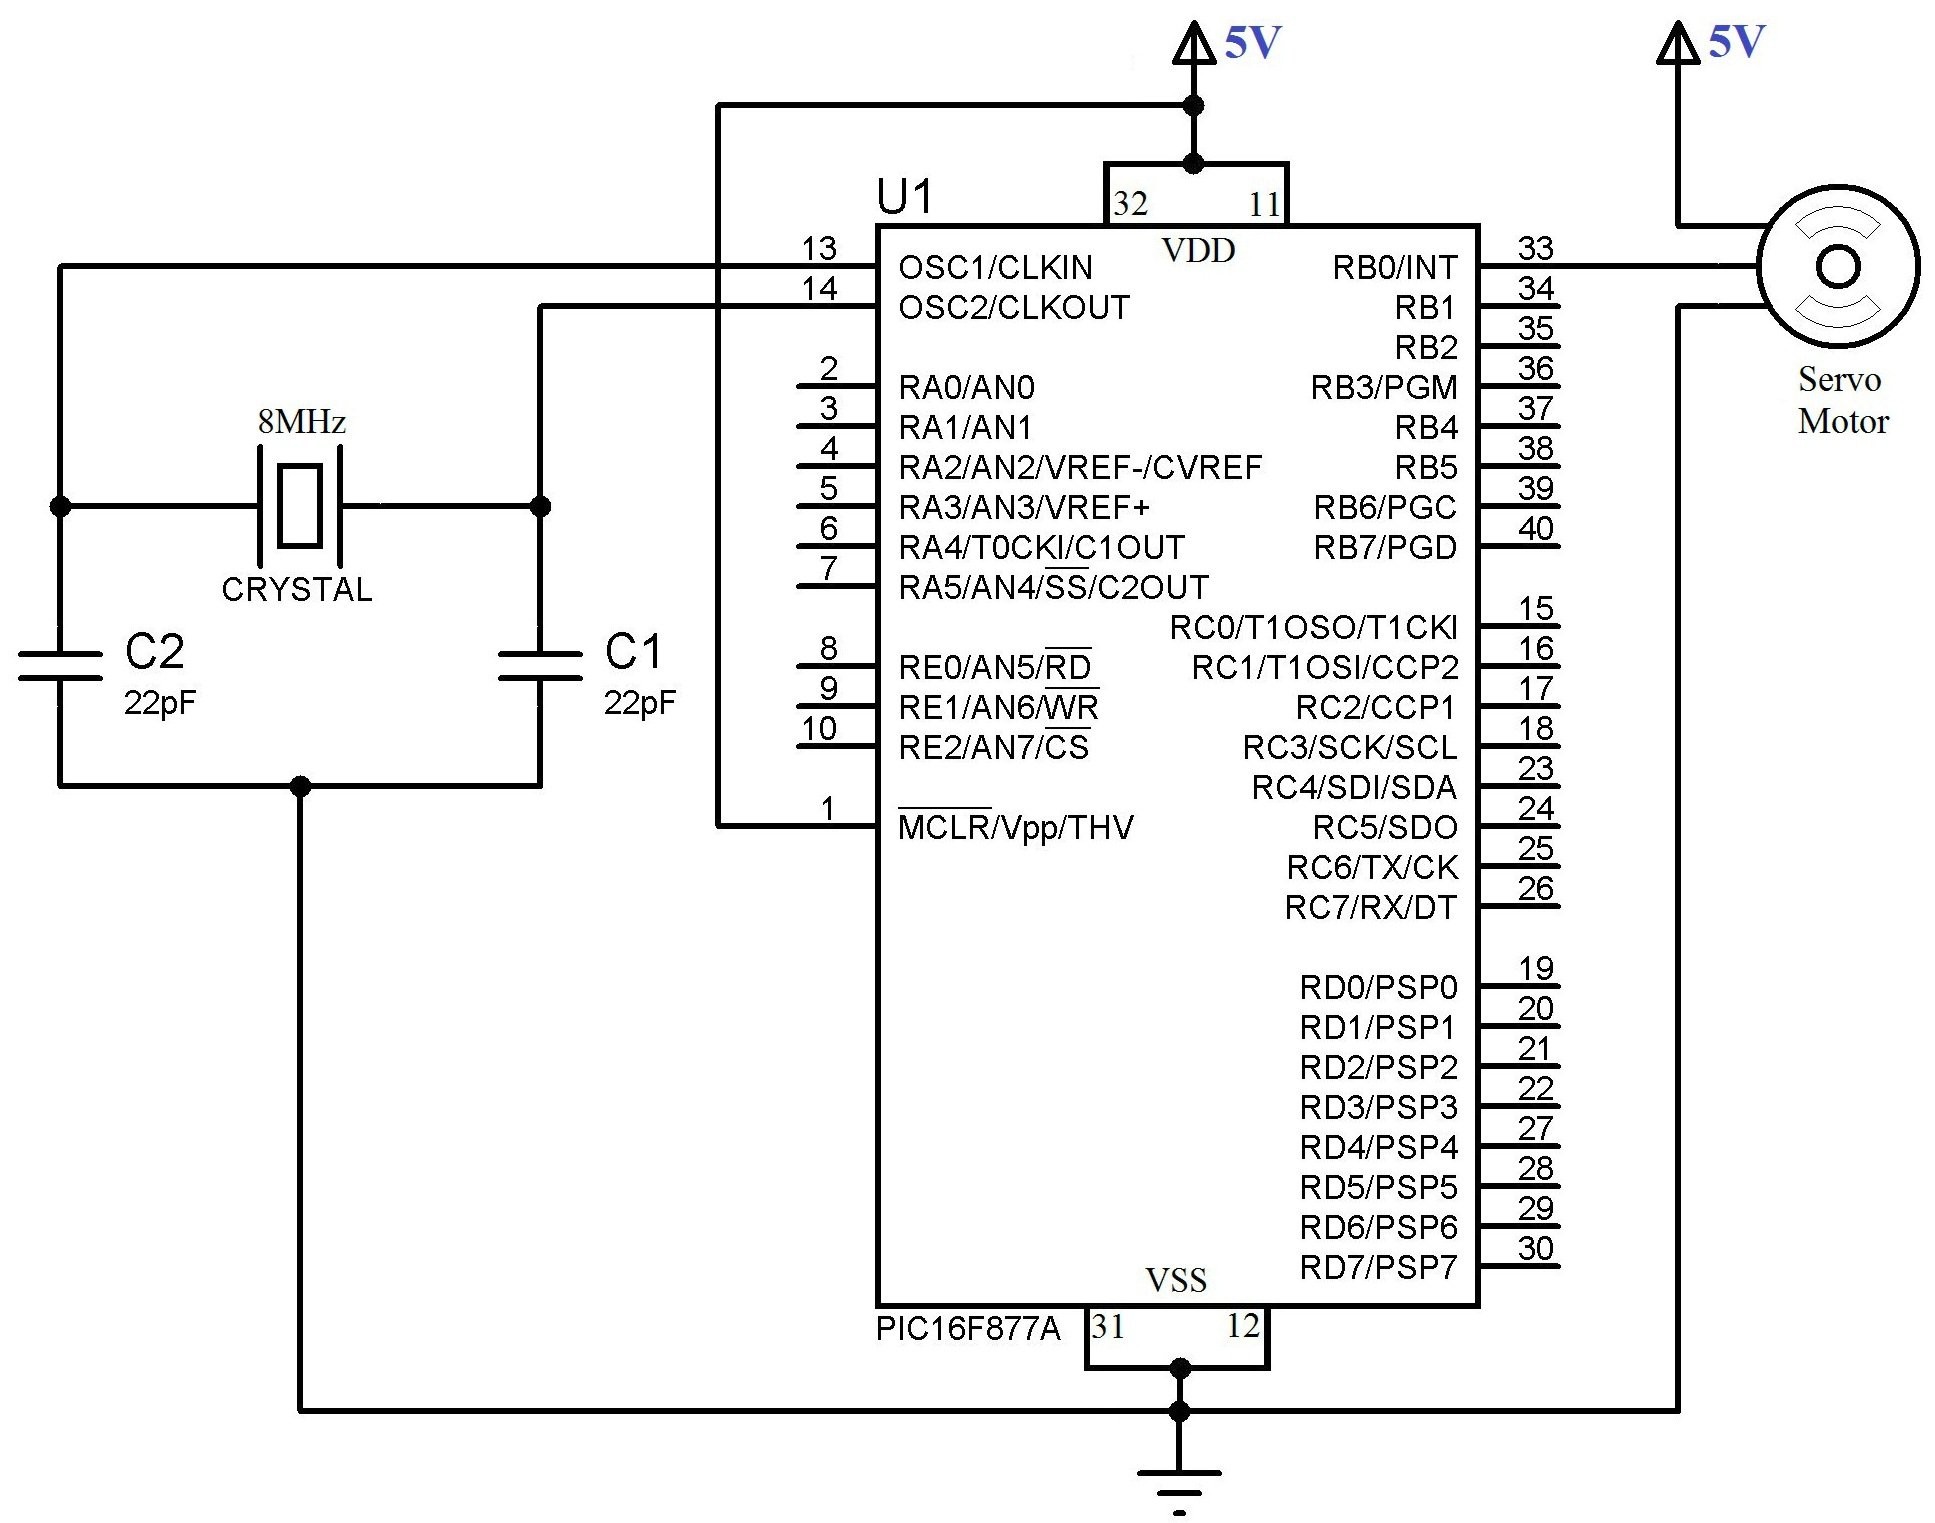 Interfacing Servo Motor With Pic Microcontroller Mikroc Circuit Diagram efy circuit lab electronics hobby